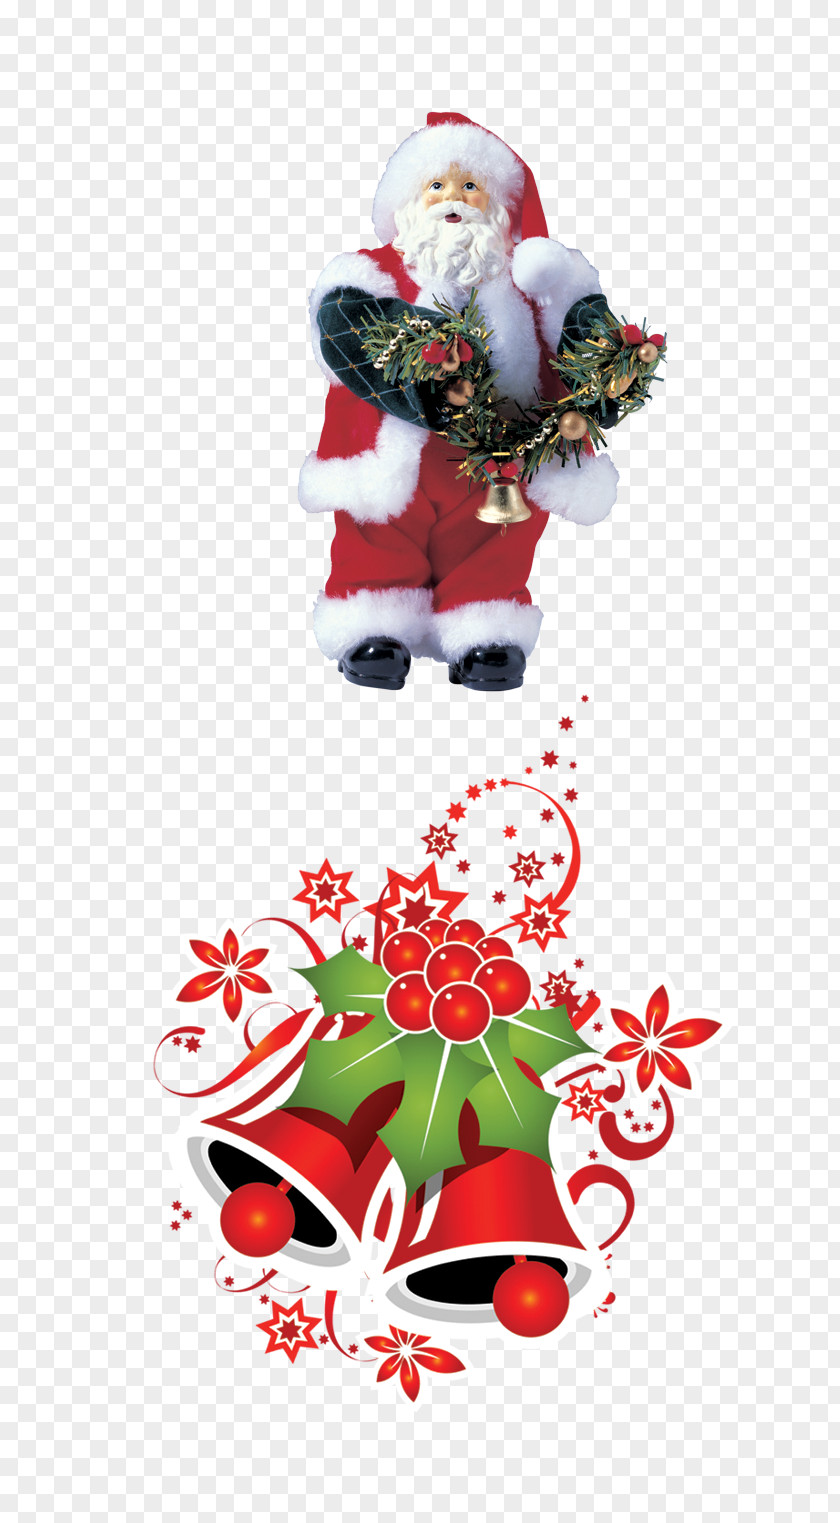 Santa Claus Christmas Jingle Bell Clip Art PNG